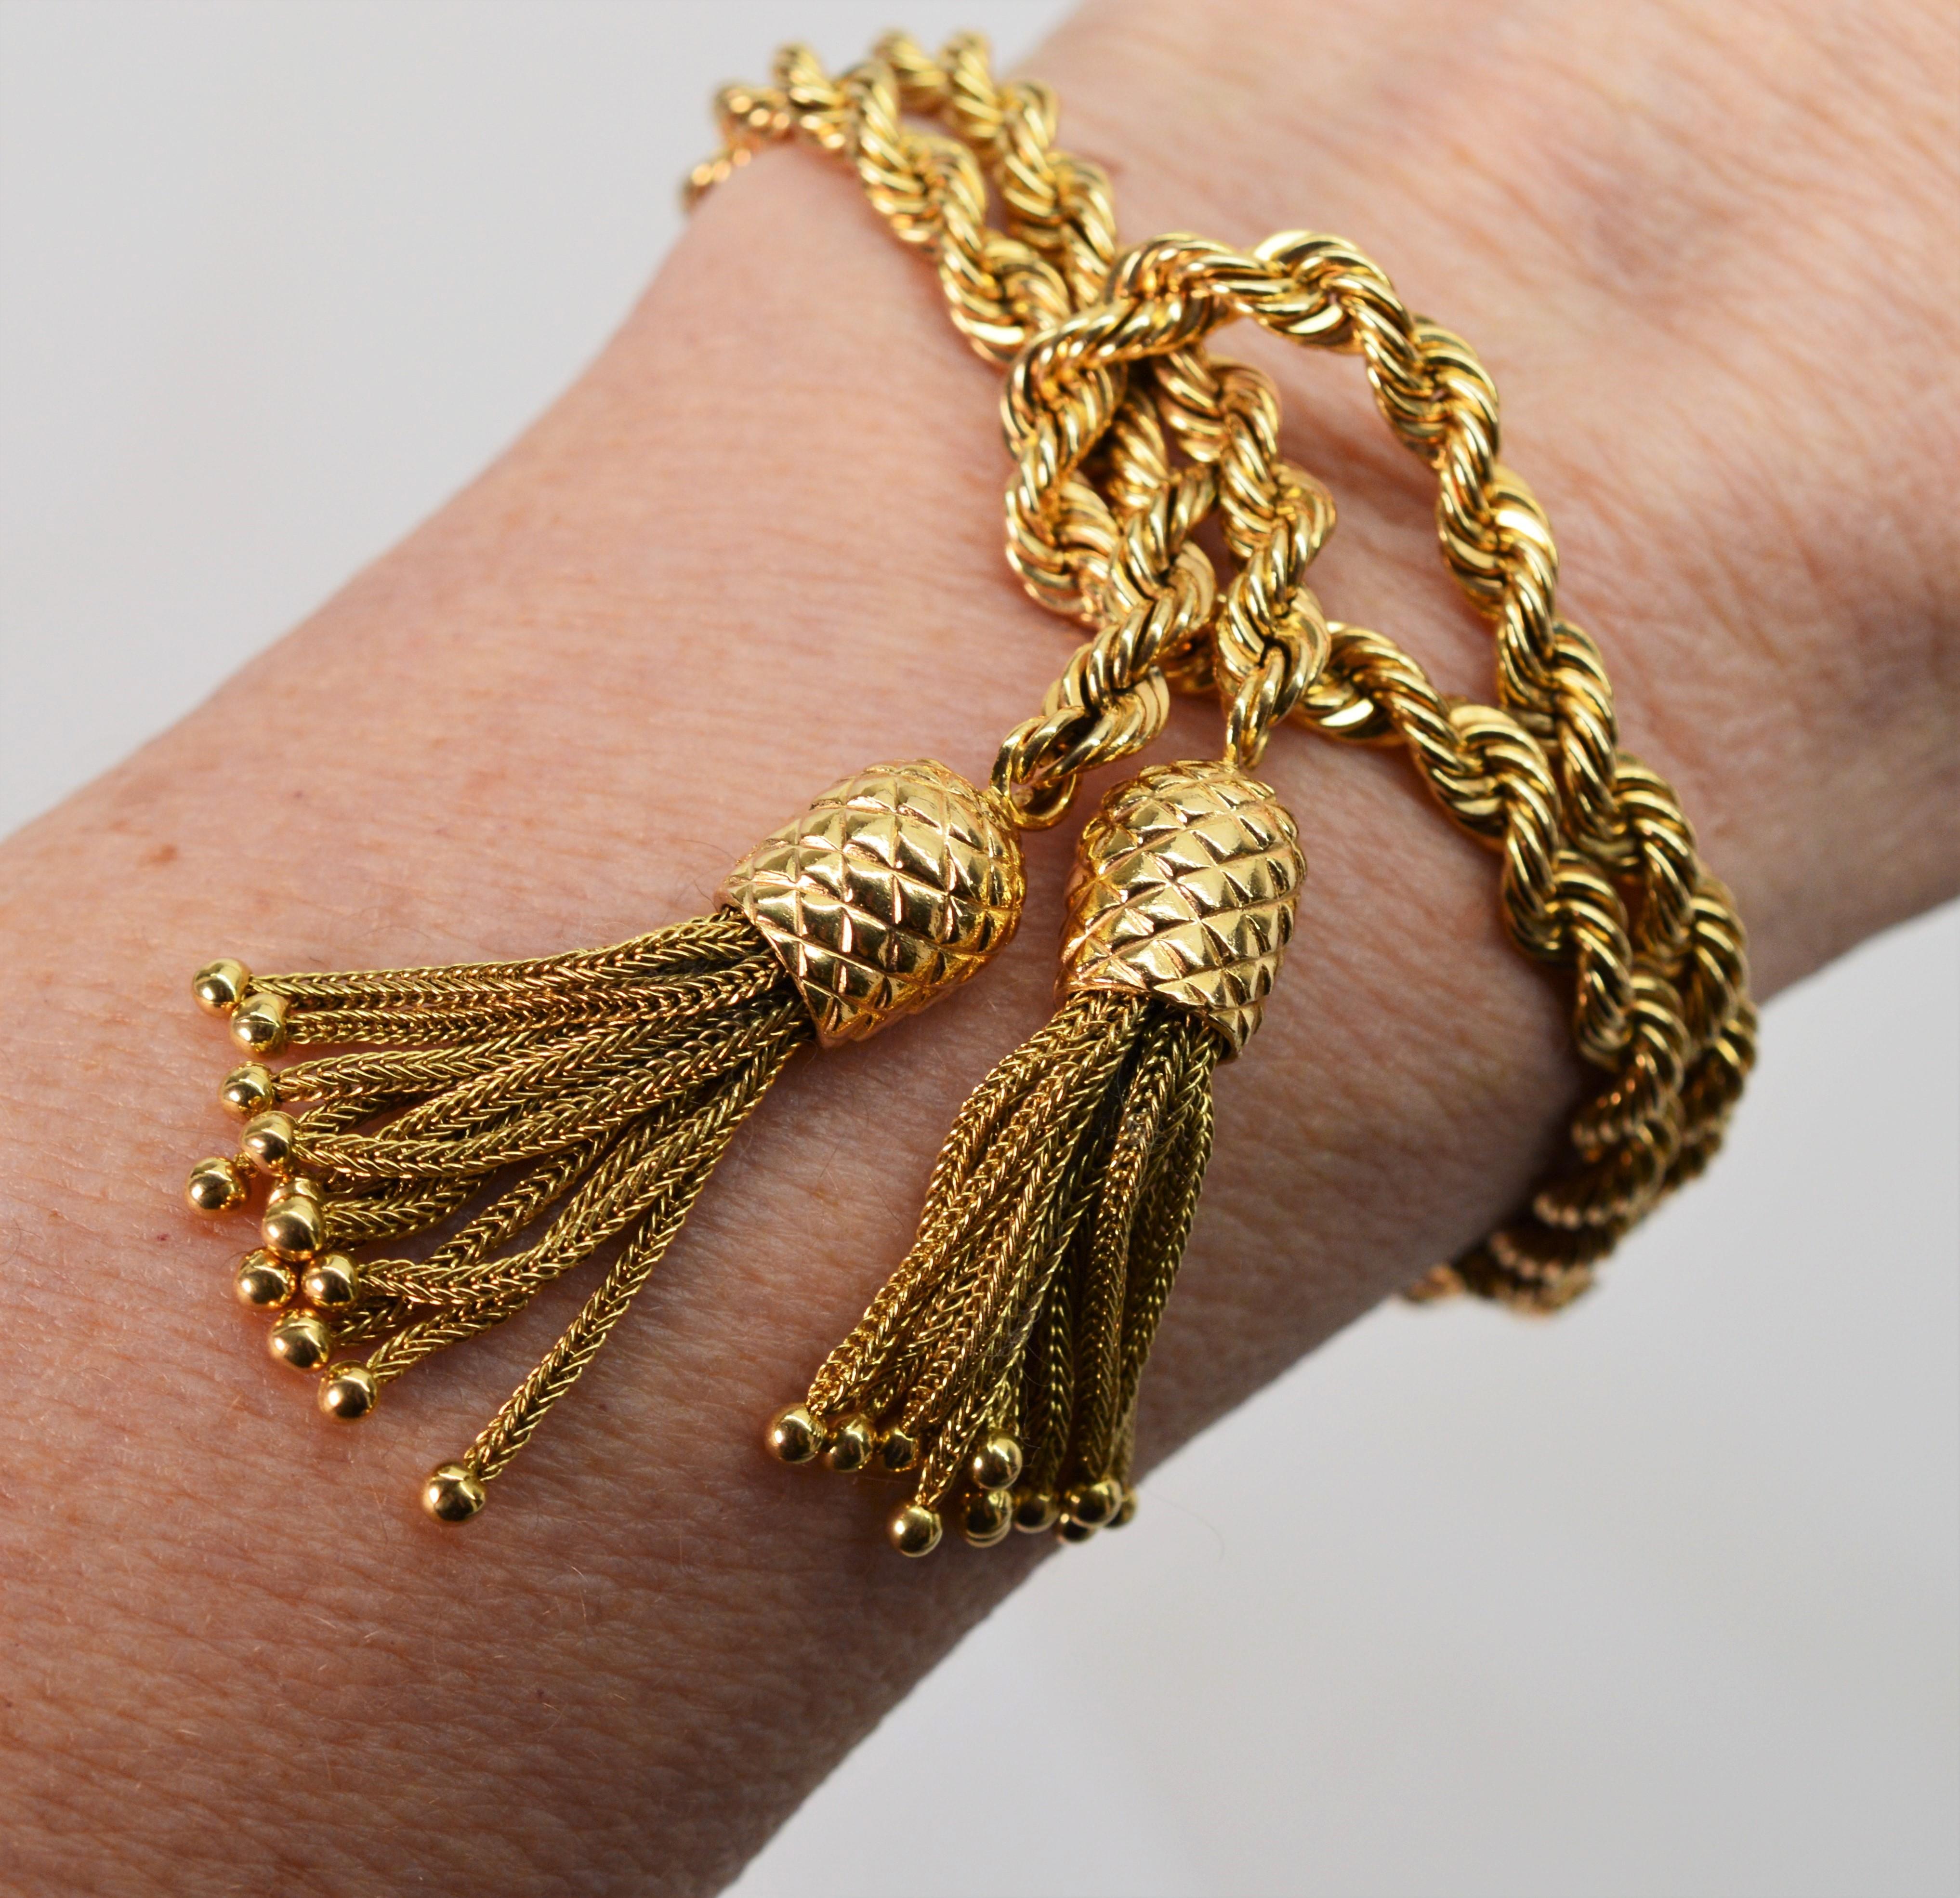 Women's Double Rope Chain 14 Karat Yellow Gold Bracelet with Pineapple Charm Tassels